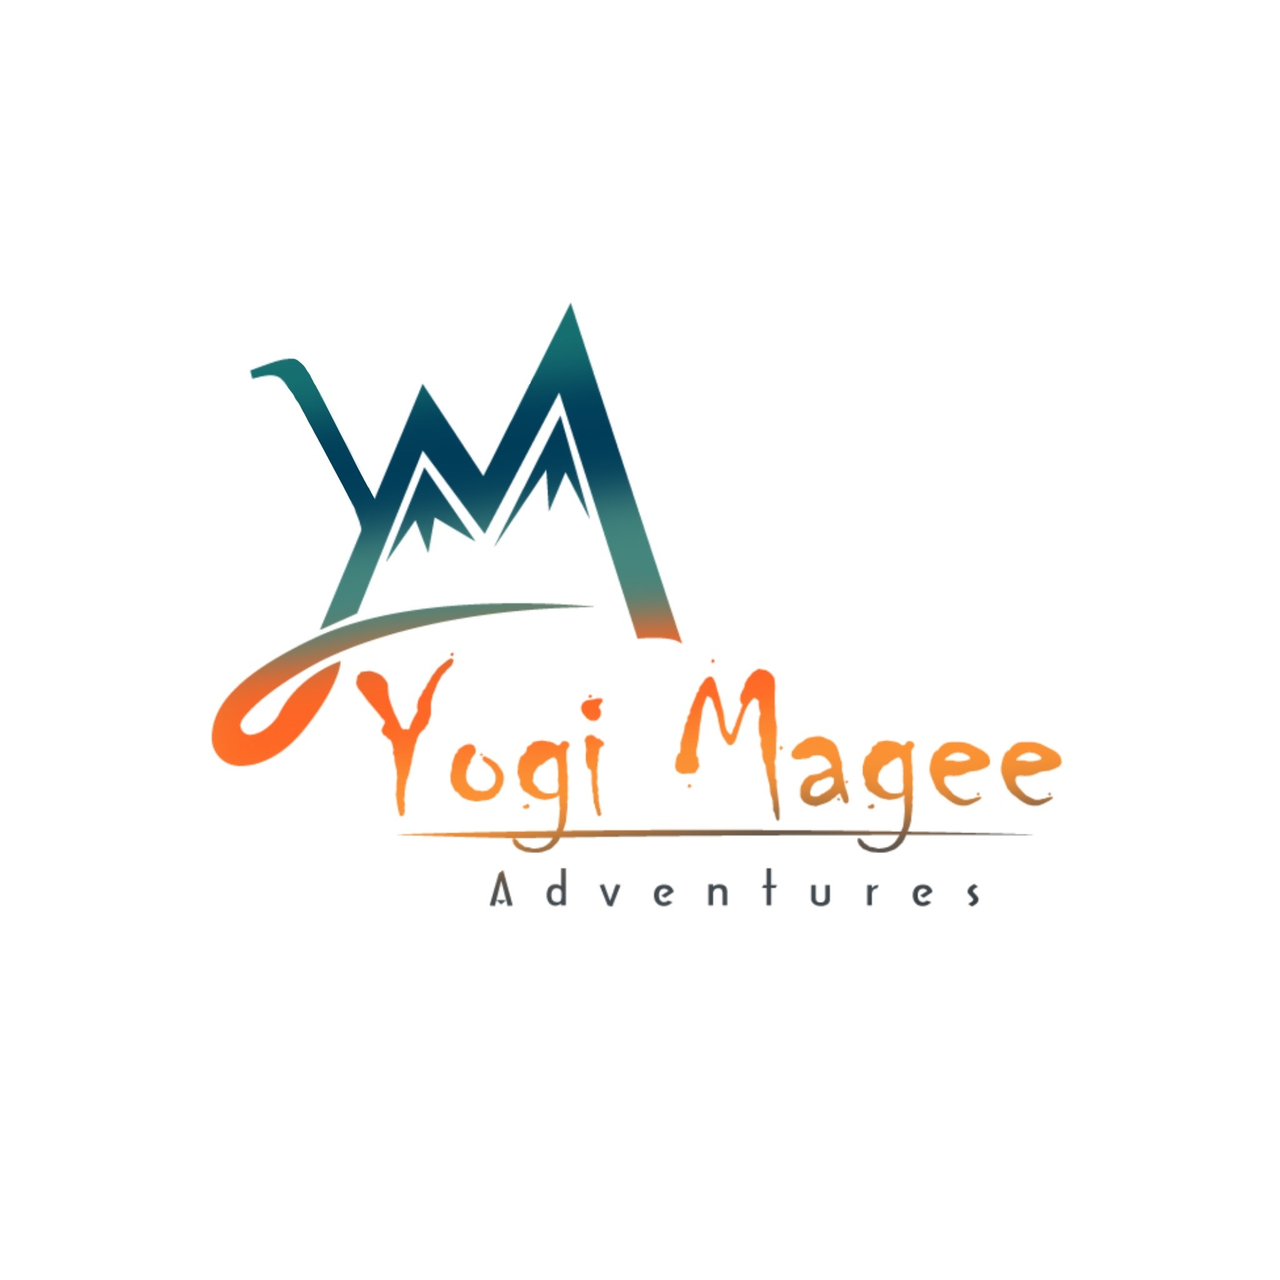 Yogi Magee’s Adventures